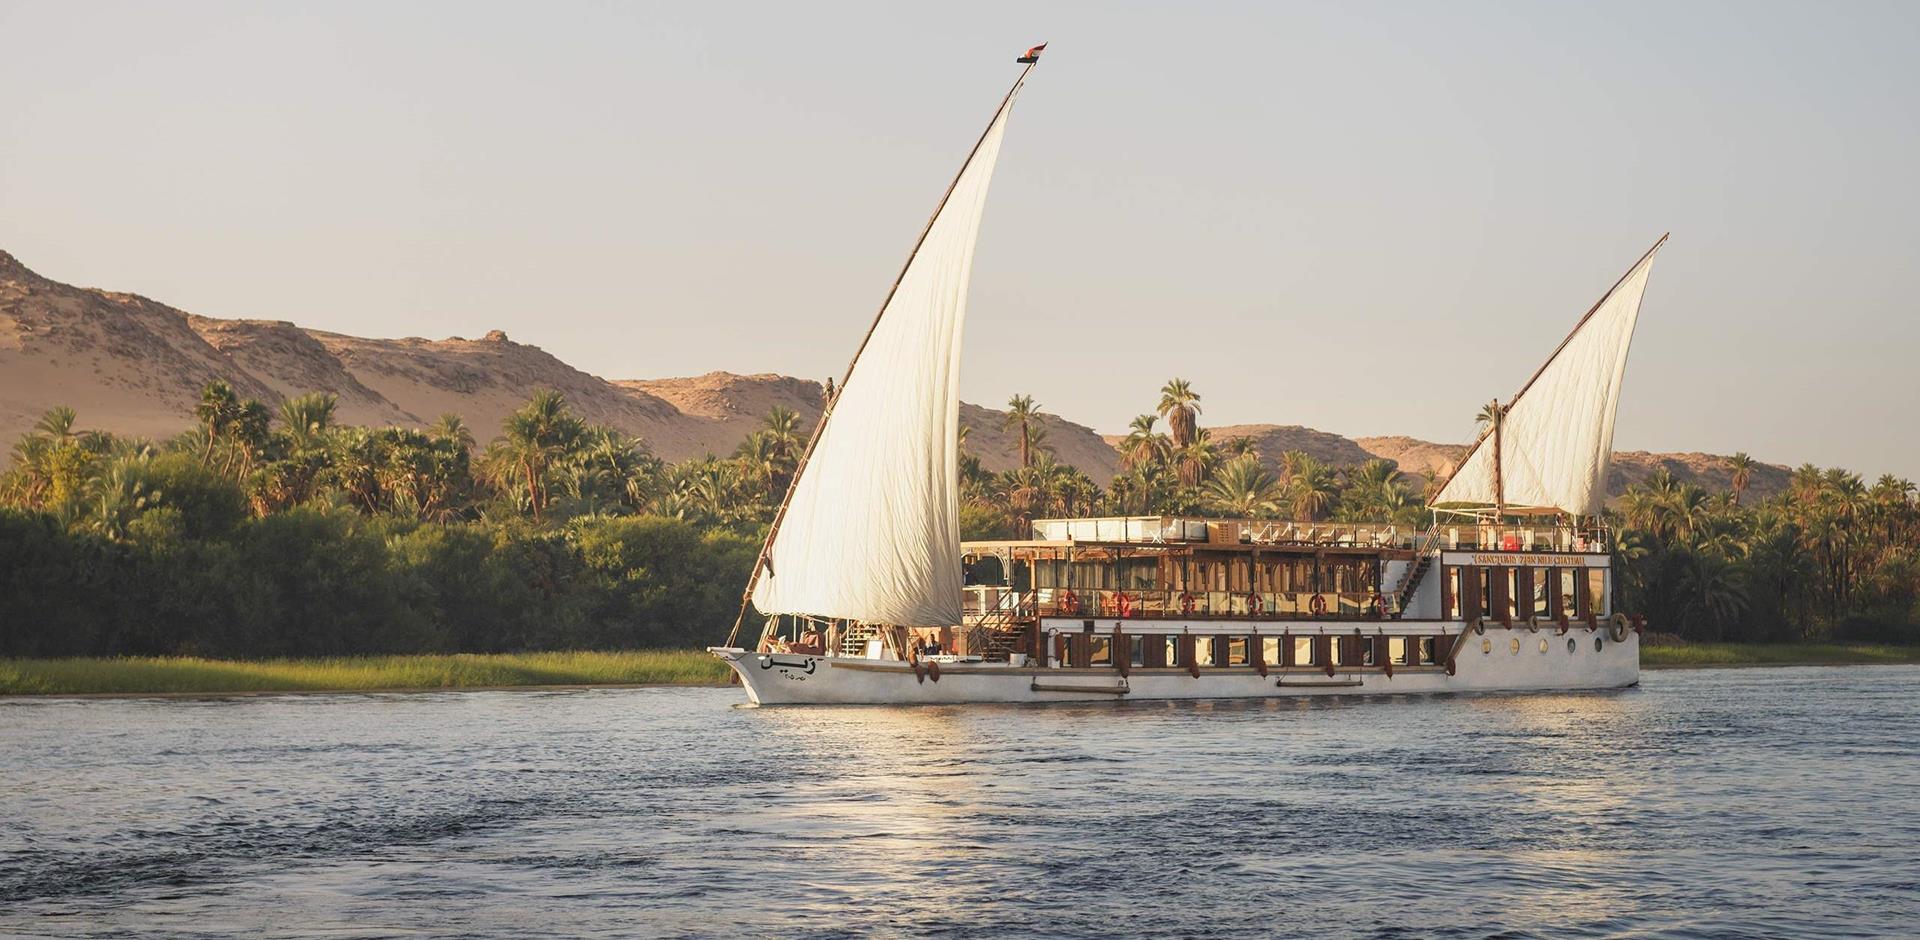 Sanctuary Zein Nile Chateau, Nile cruise boat, Egypt